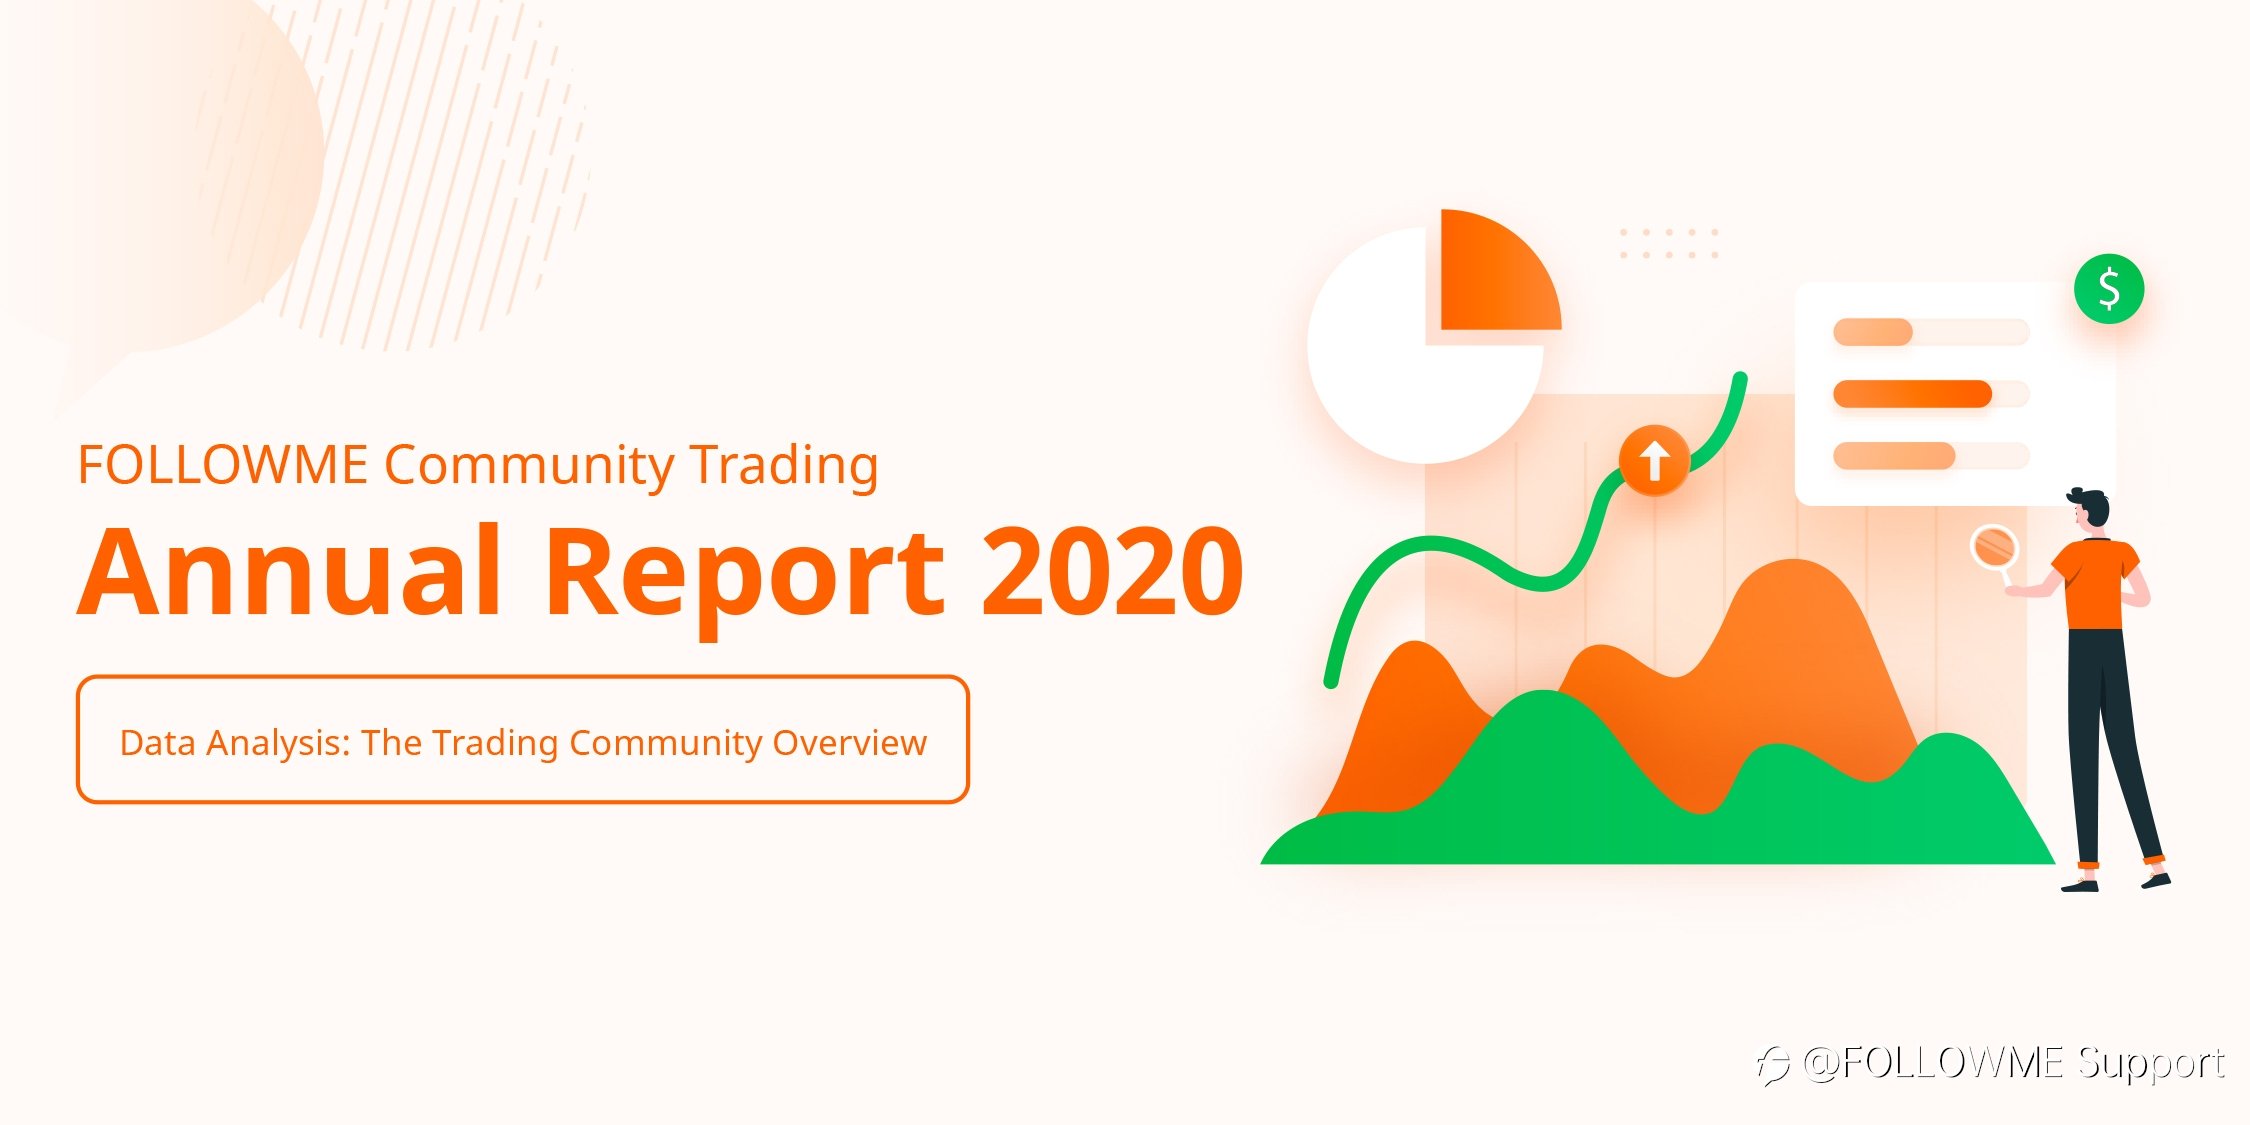 FOLLOWME Community Trading Annual Report 2020